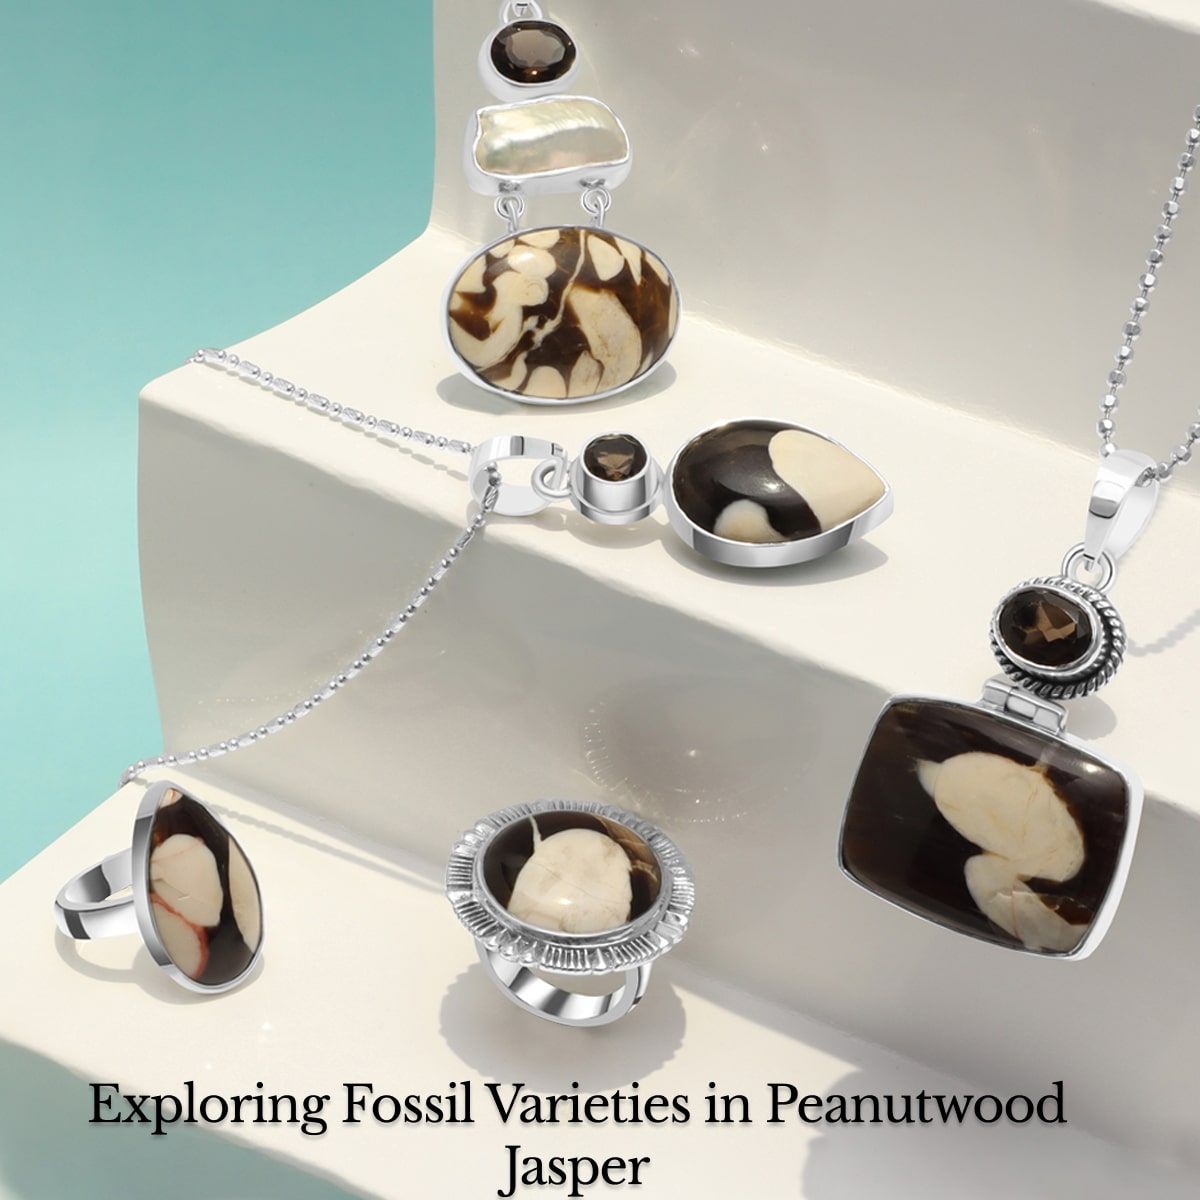 Types of Fossils Found in Peanutwood Jasper